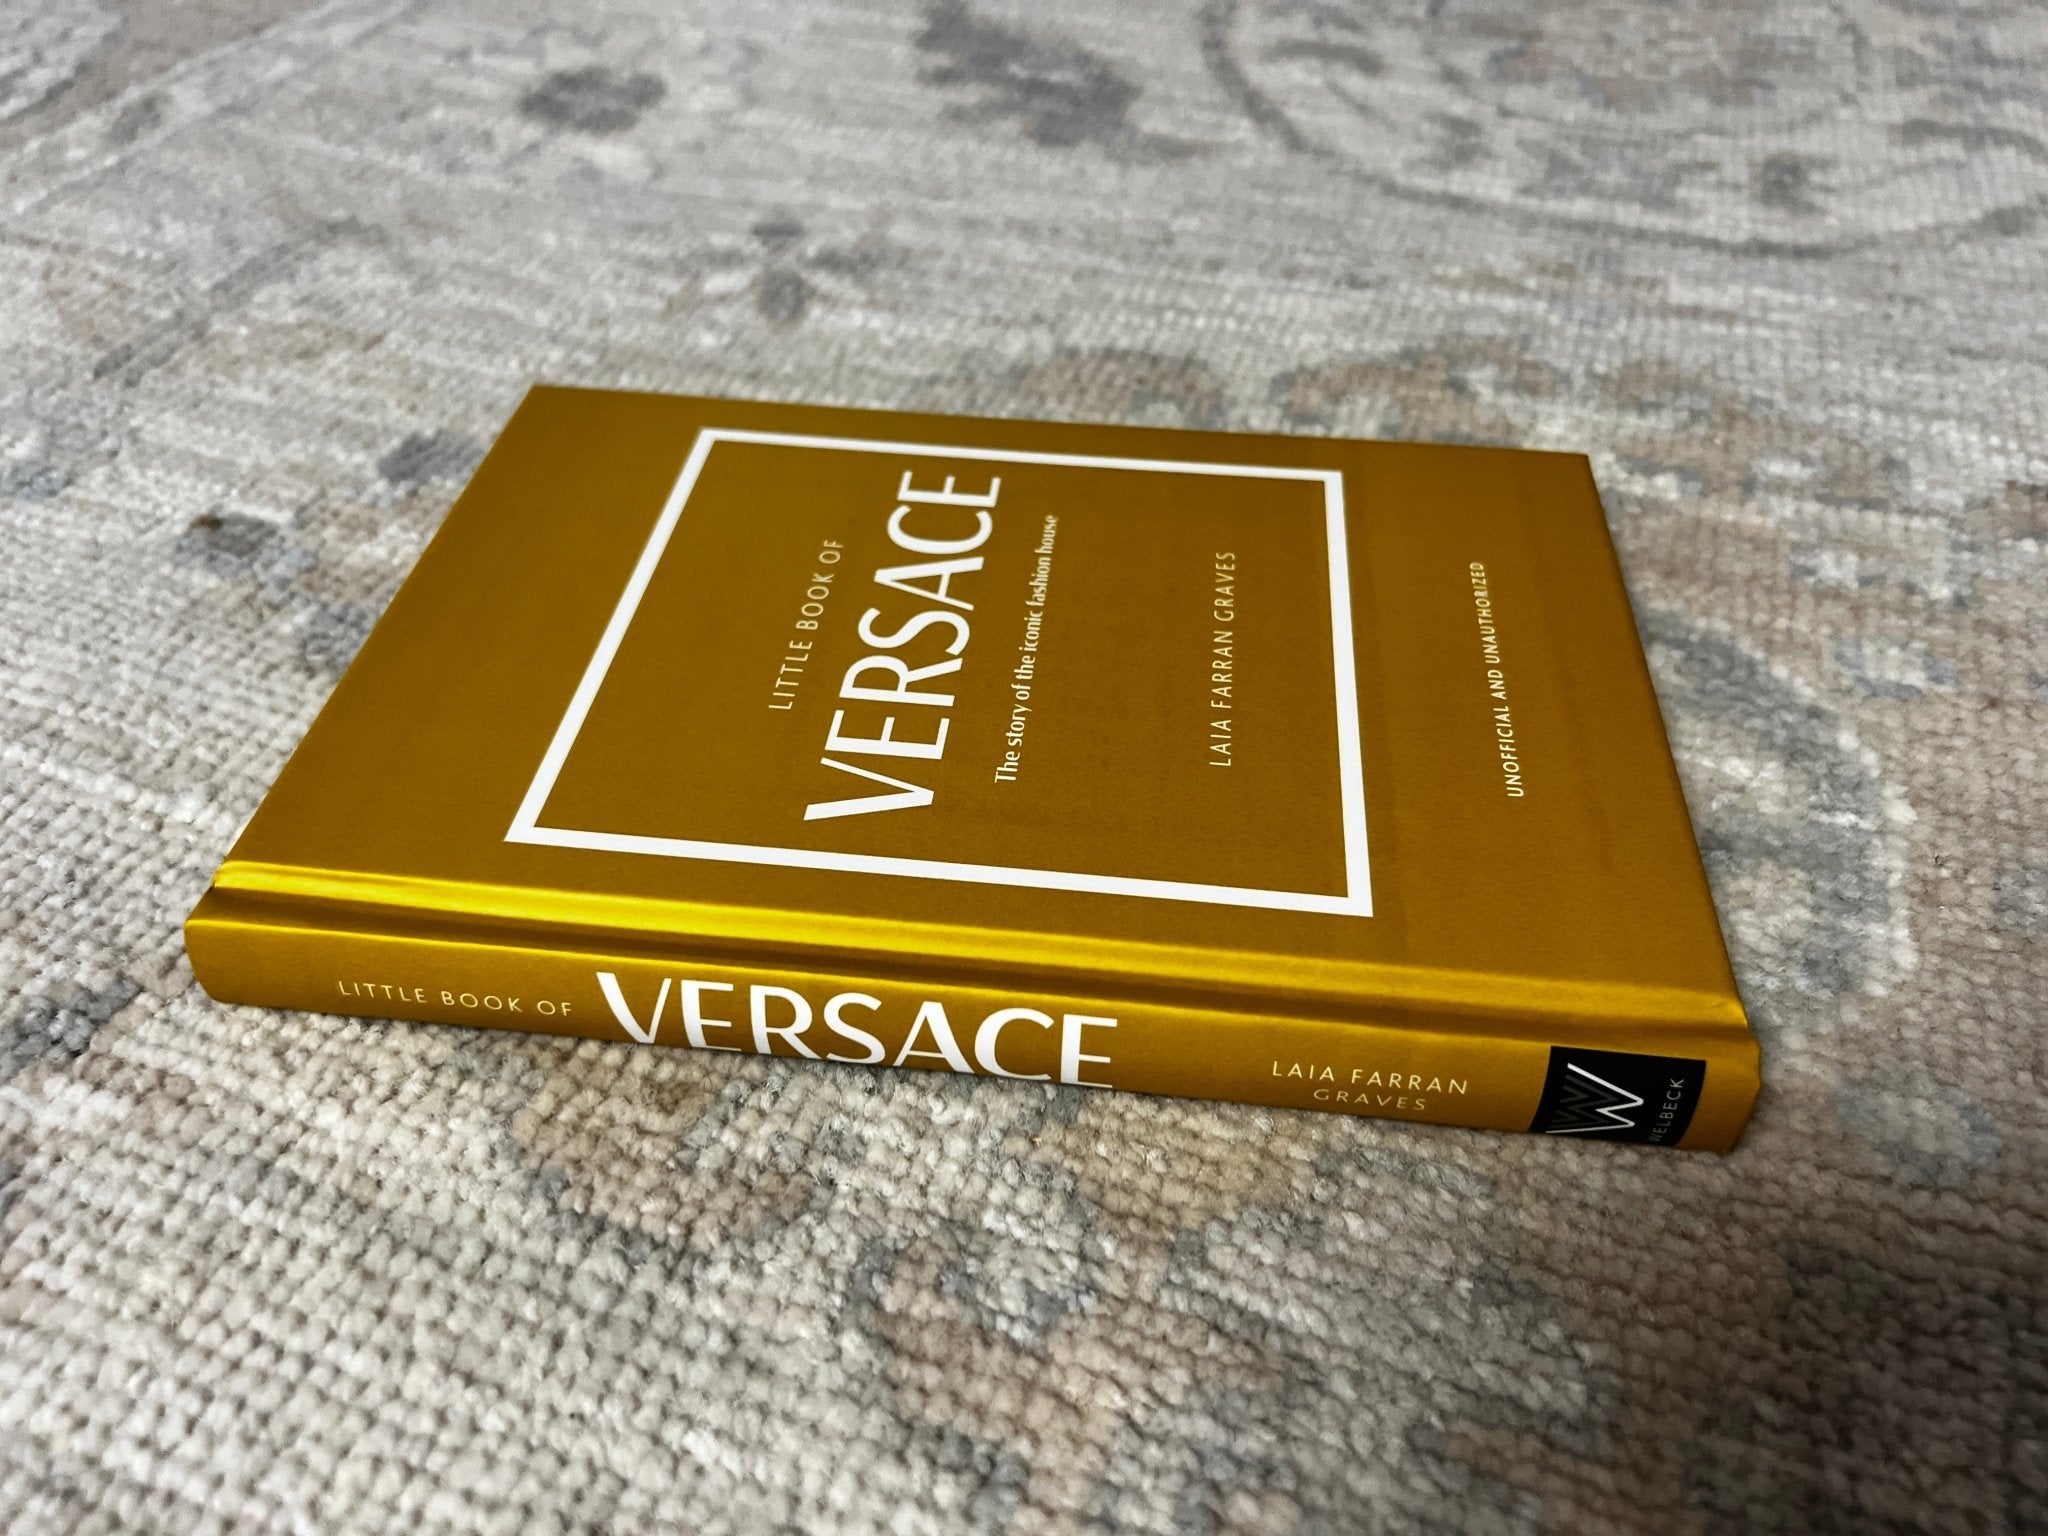 Little Book of Versace Petite Travel Book | Banana Manor Rug Company